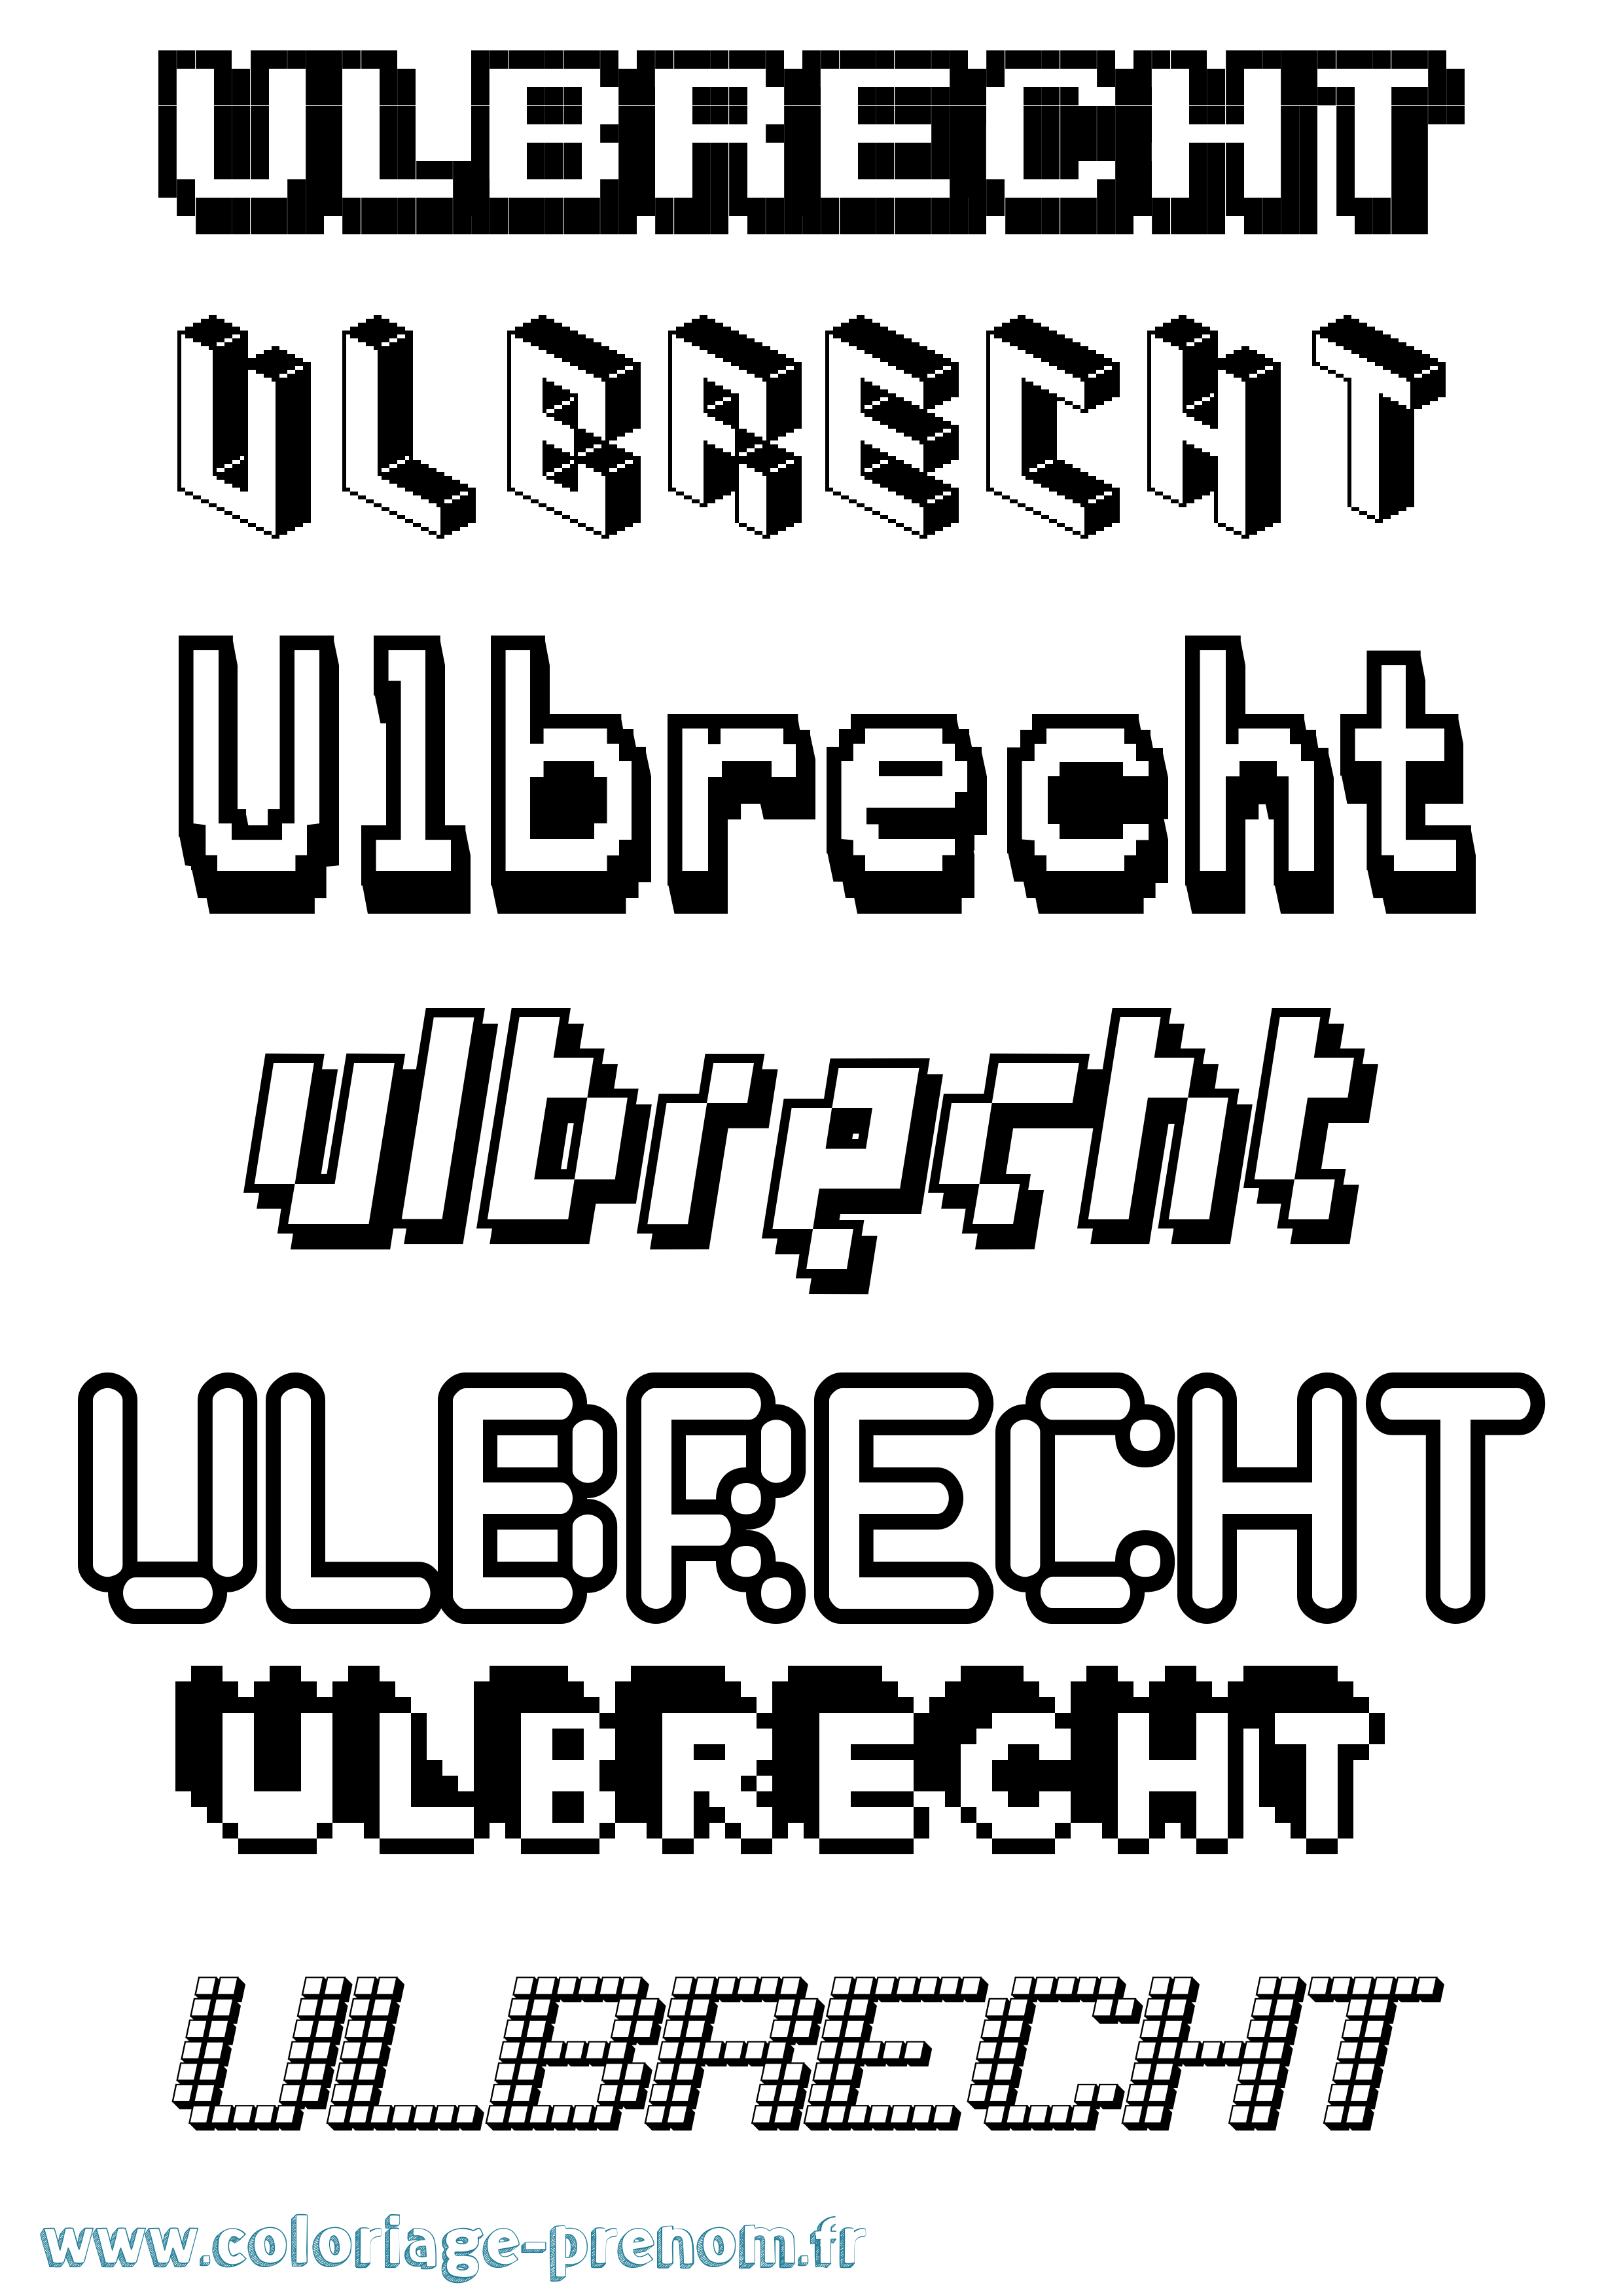 Coloriage prénom Ulbrecht Pixel